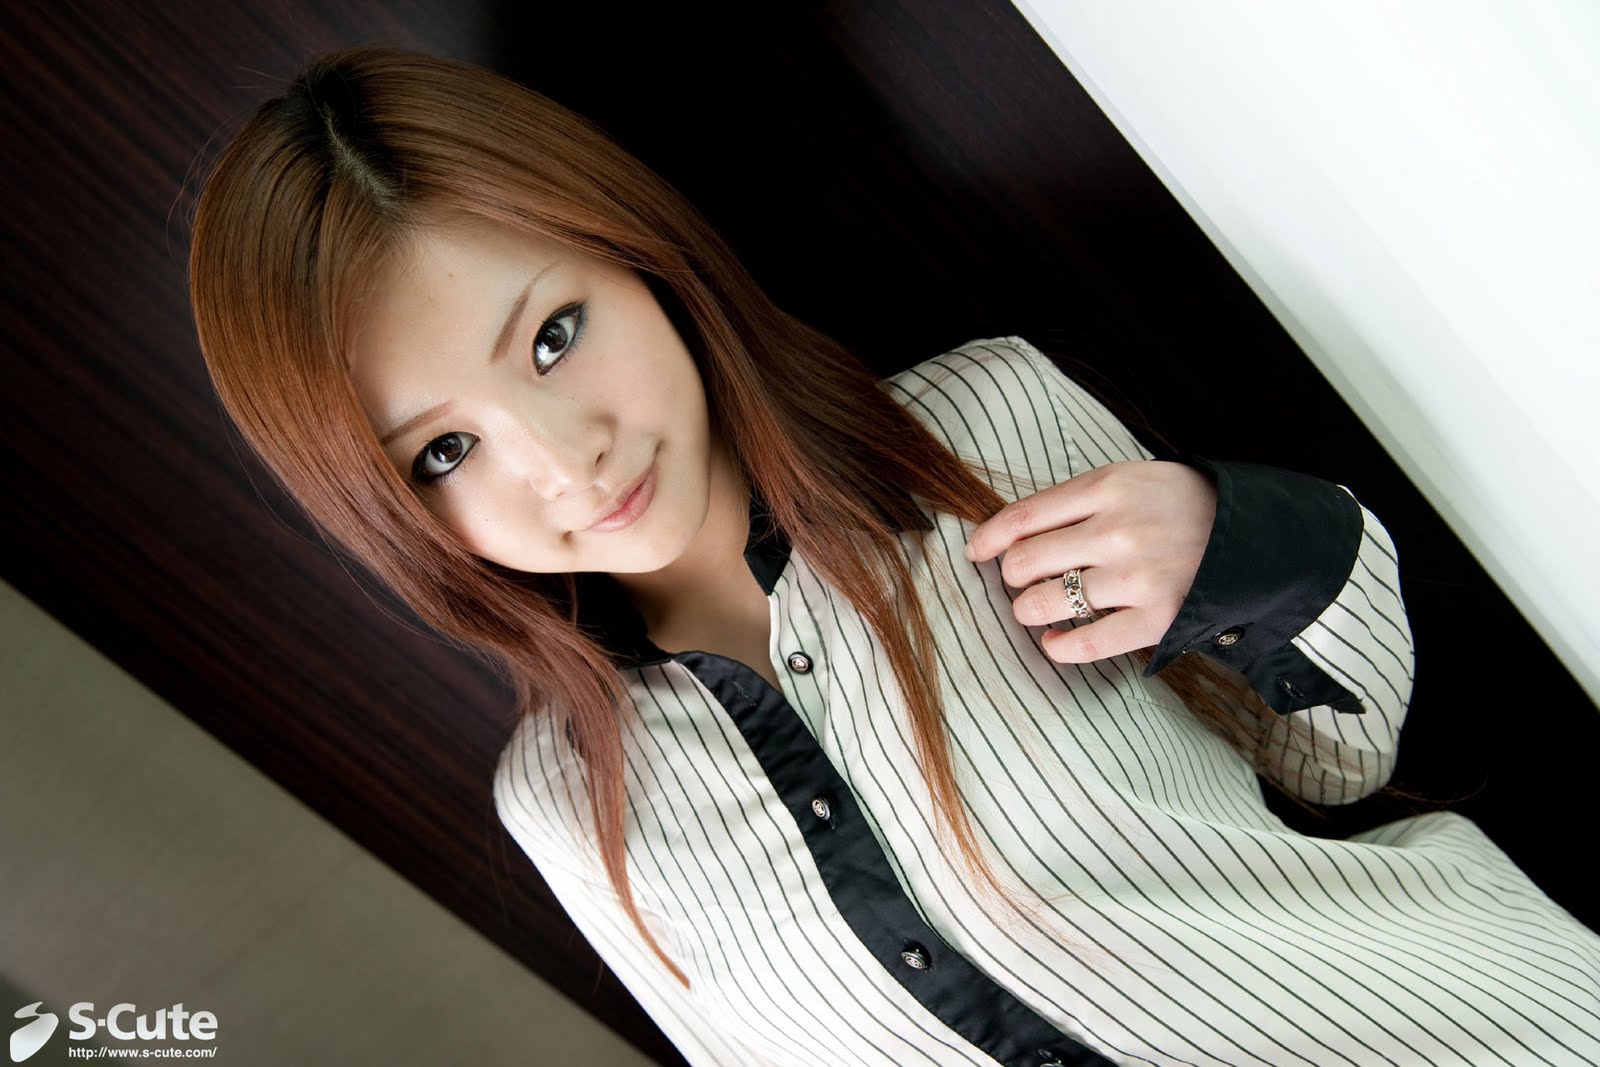 Japanese Girl Pictures Cute Pic Suzuka Ishikawa In Hotel Room